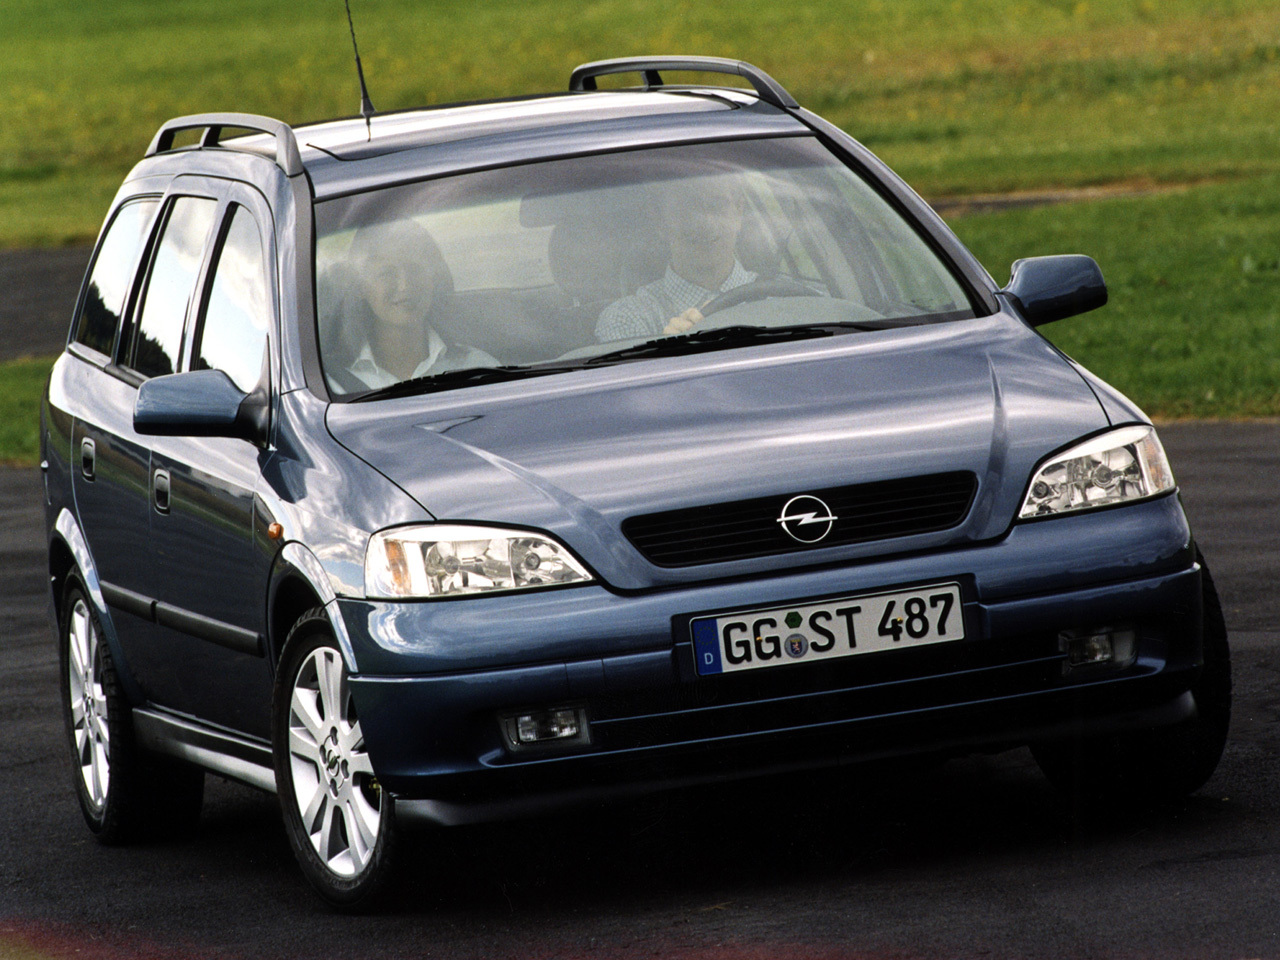 Джи караван. Opel Astra g 1998. Opel Astra g 1998-2004.